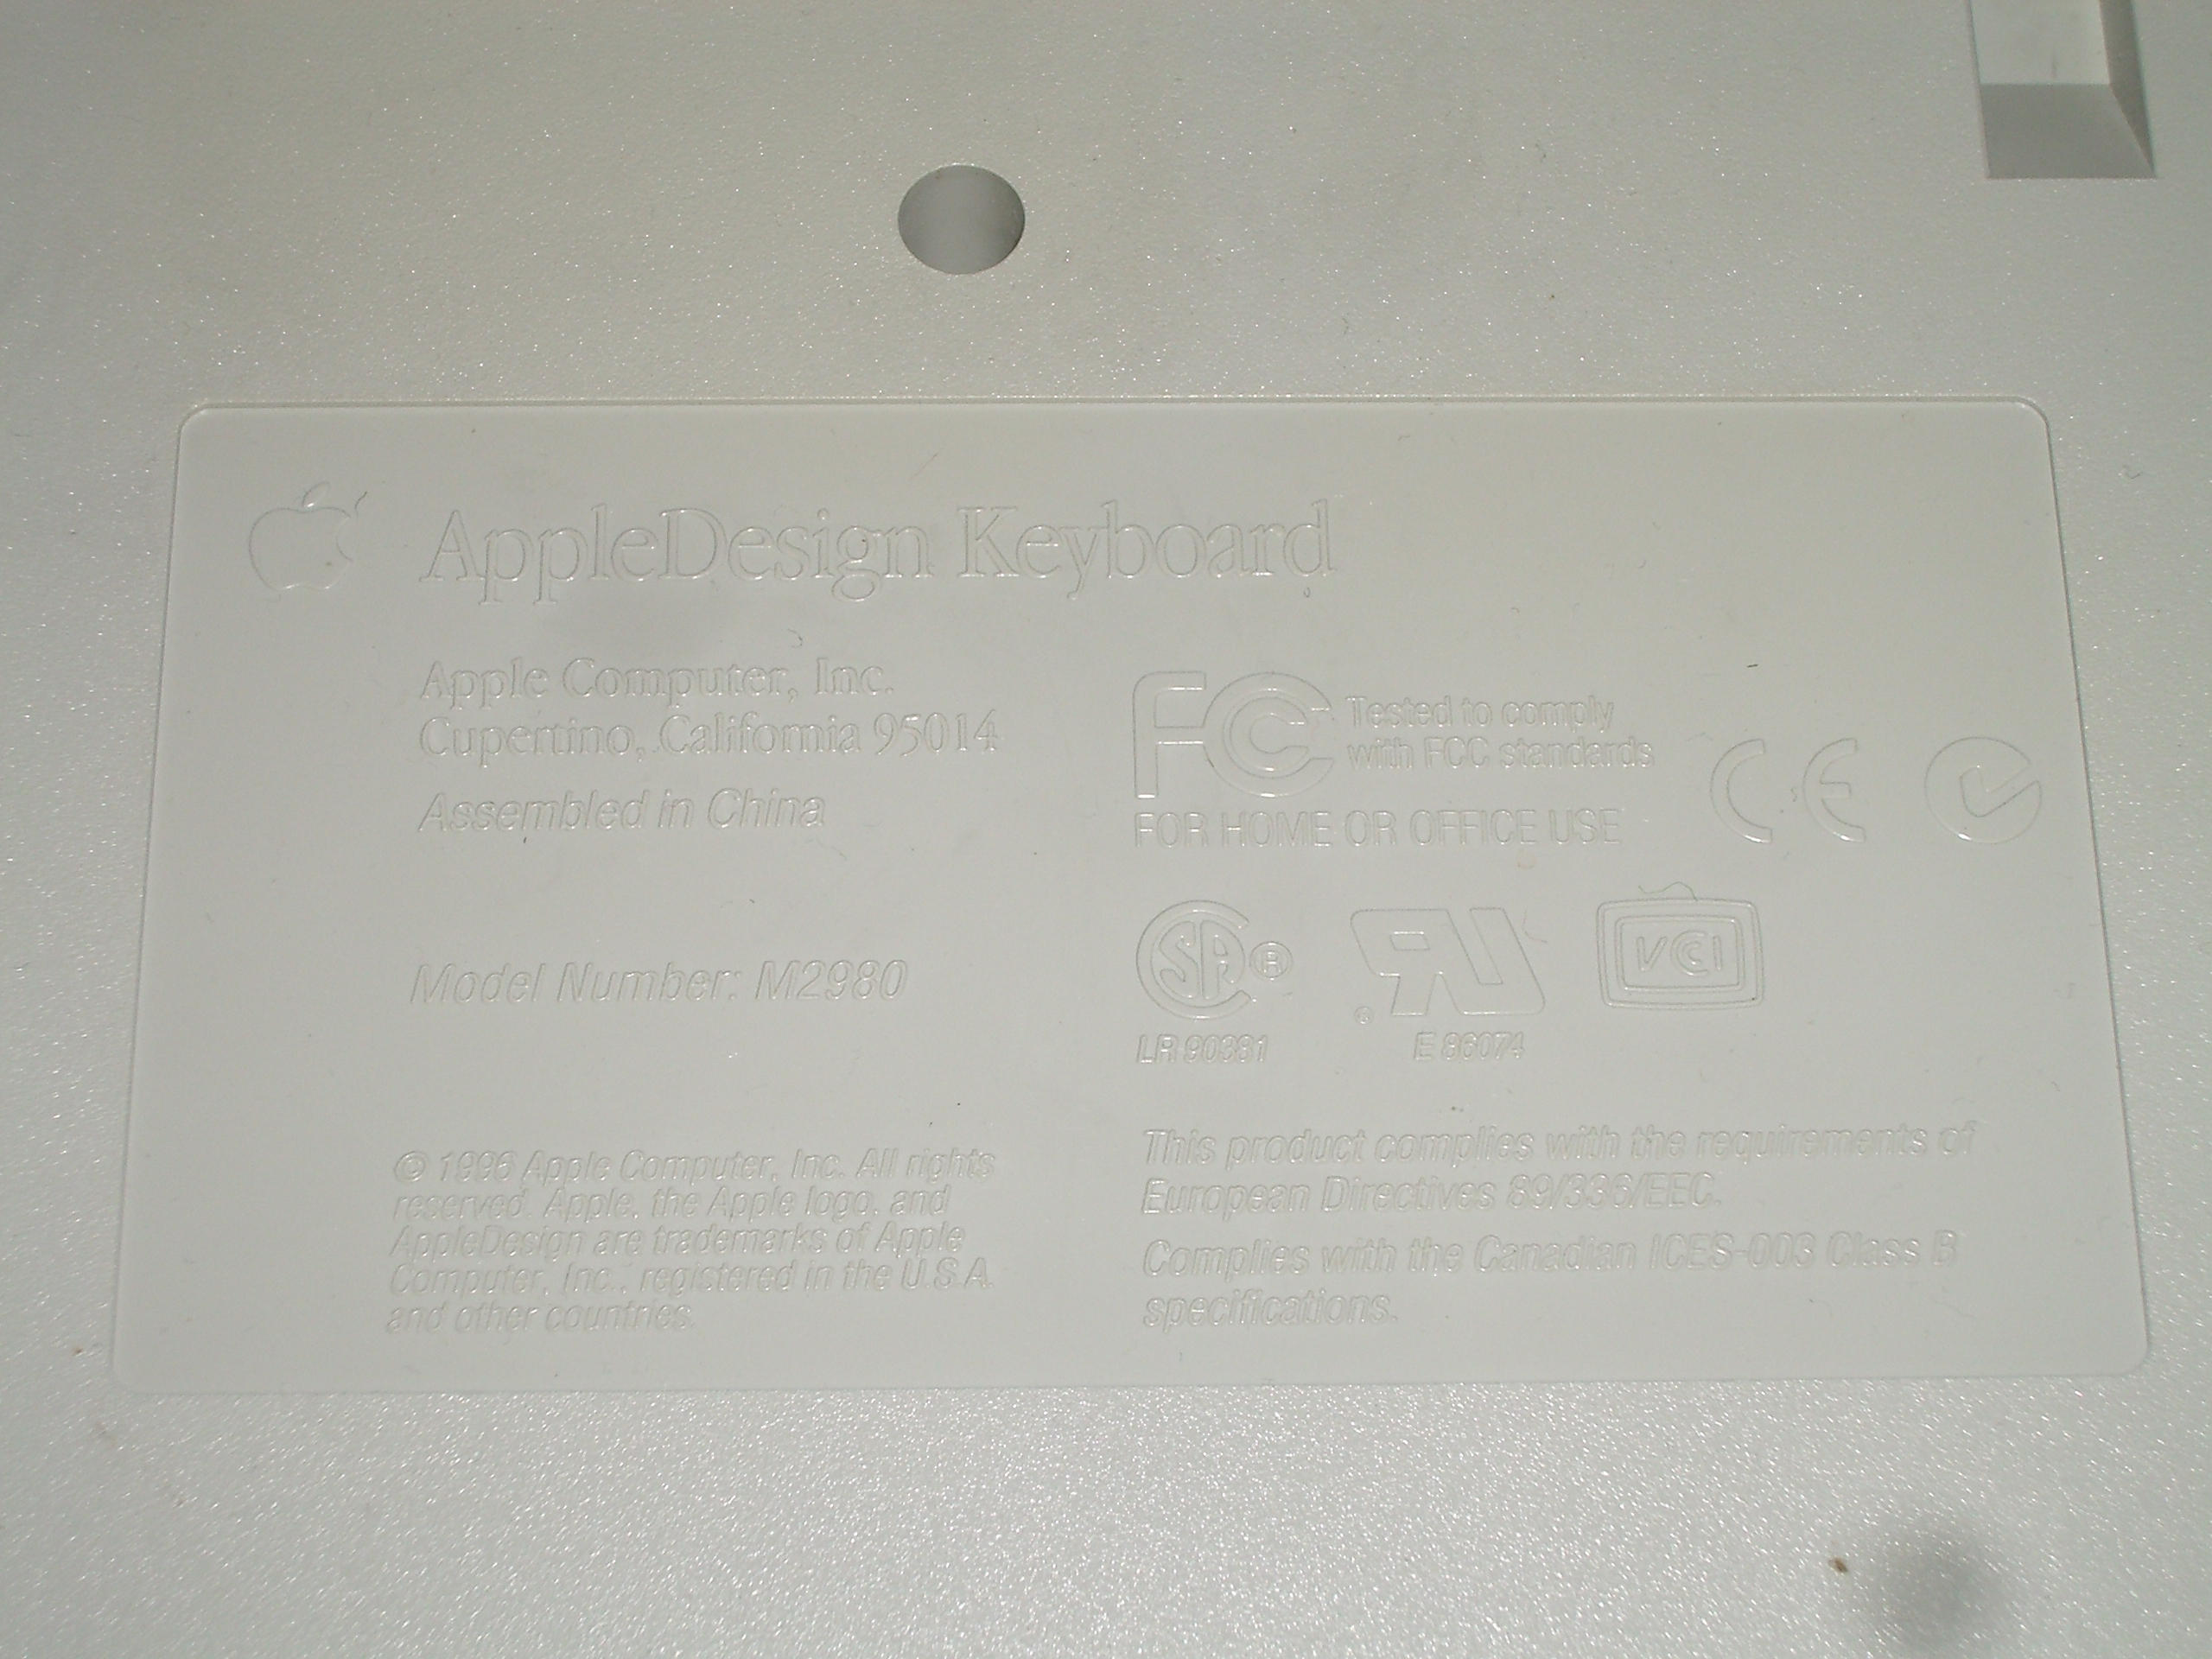 AppleDesign Keyboard (Alps) rear imprint.jpg